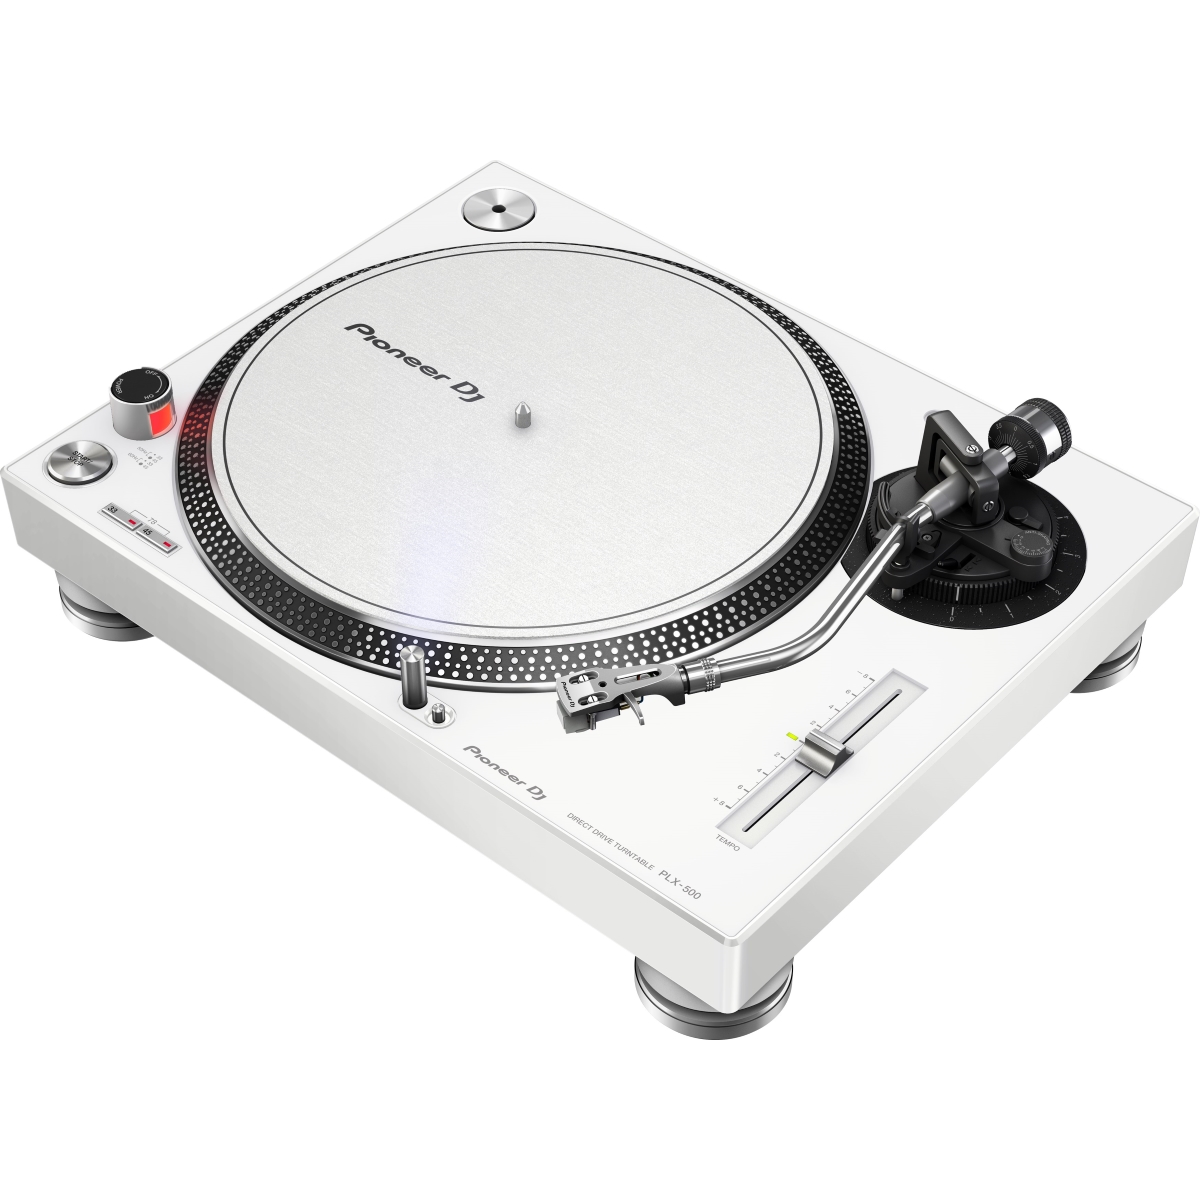 GIRADISCHI DJ PIONEER TRAZIONE DIRETTA PLX-500-W